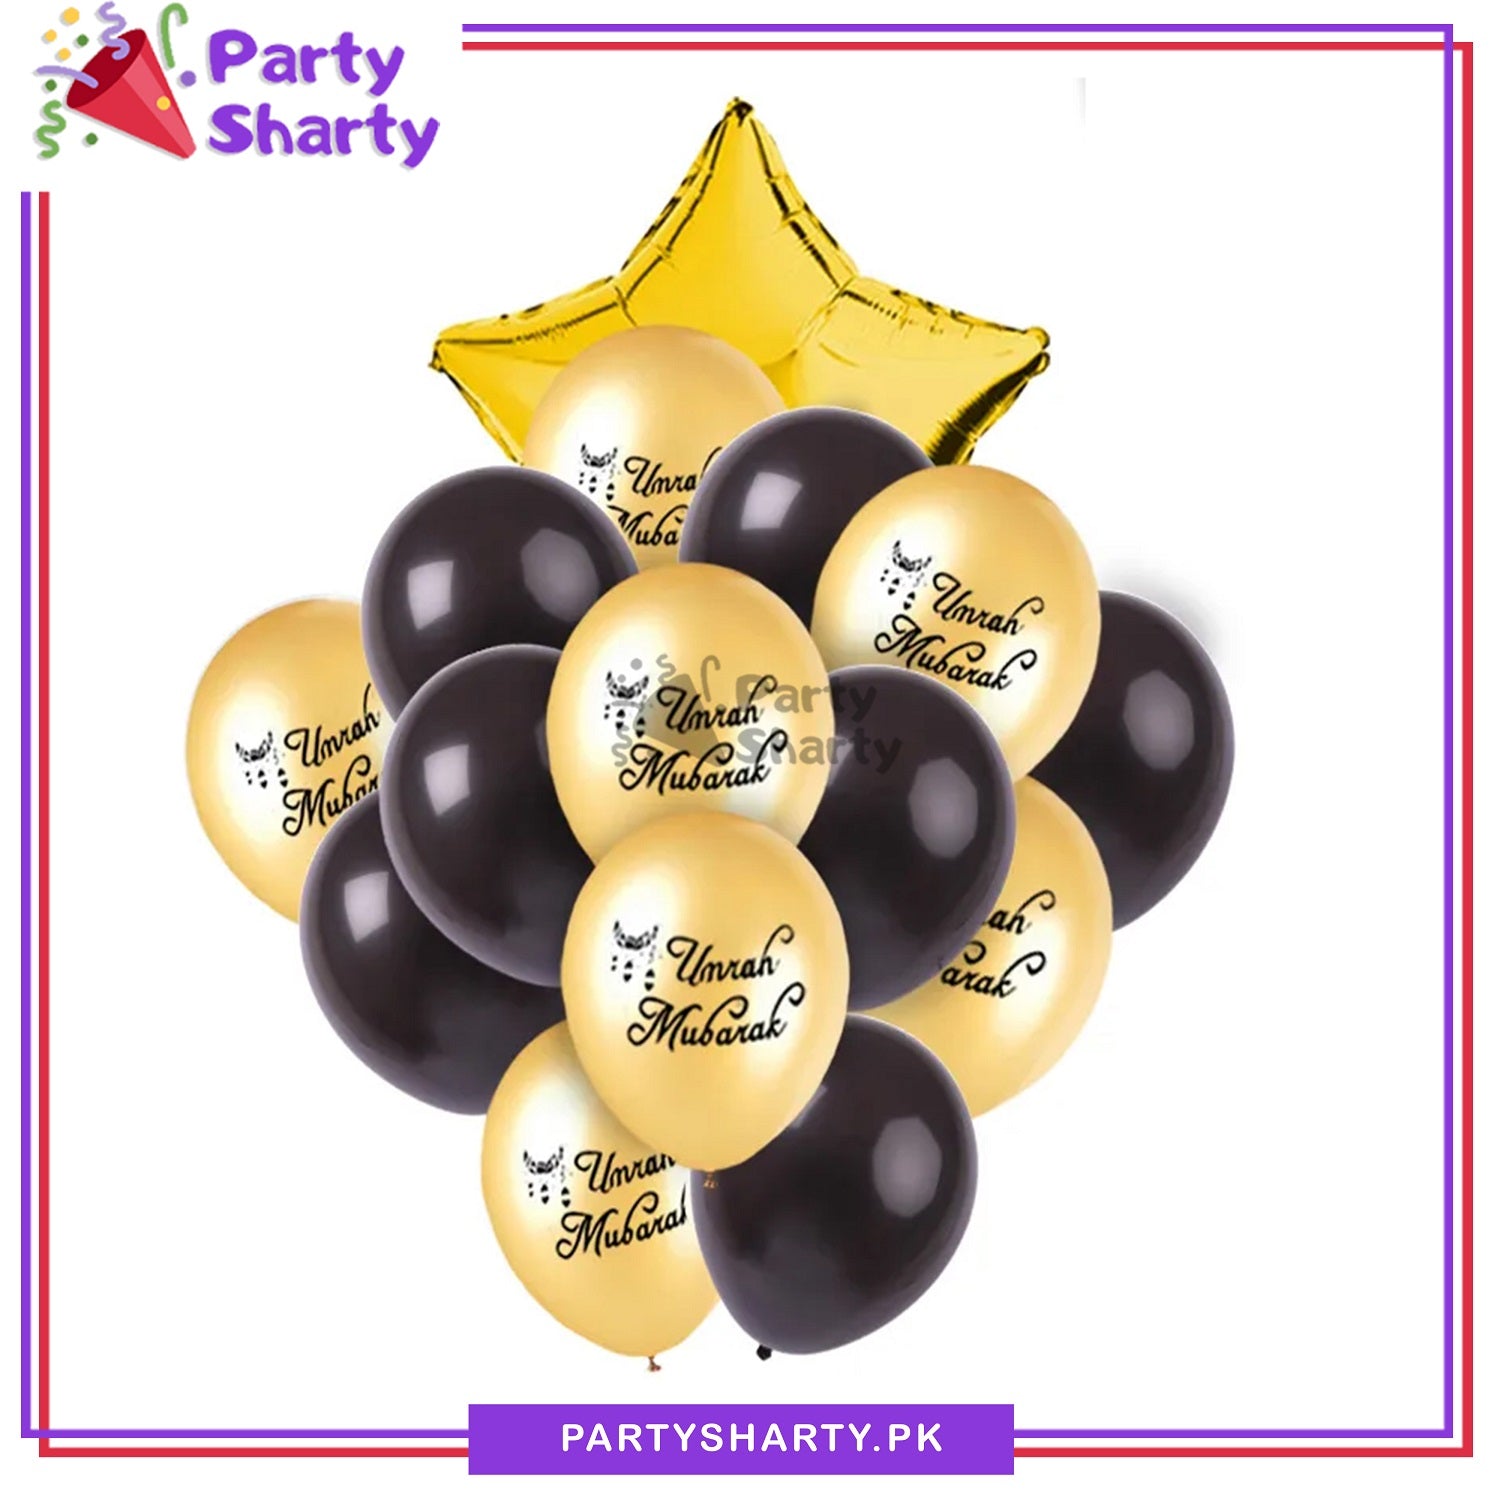 15pcs / Set Umrah Mubarak Printed Golden Latex Balloons For Umrah Mubarak Theme Decoration and Celebration